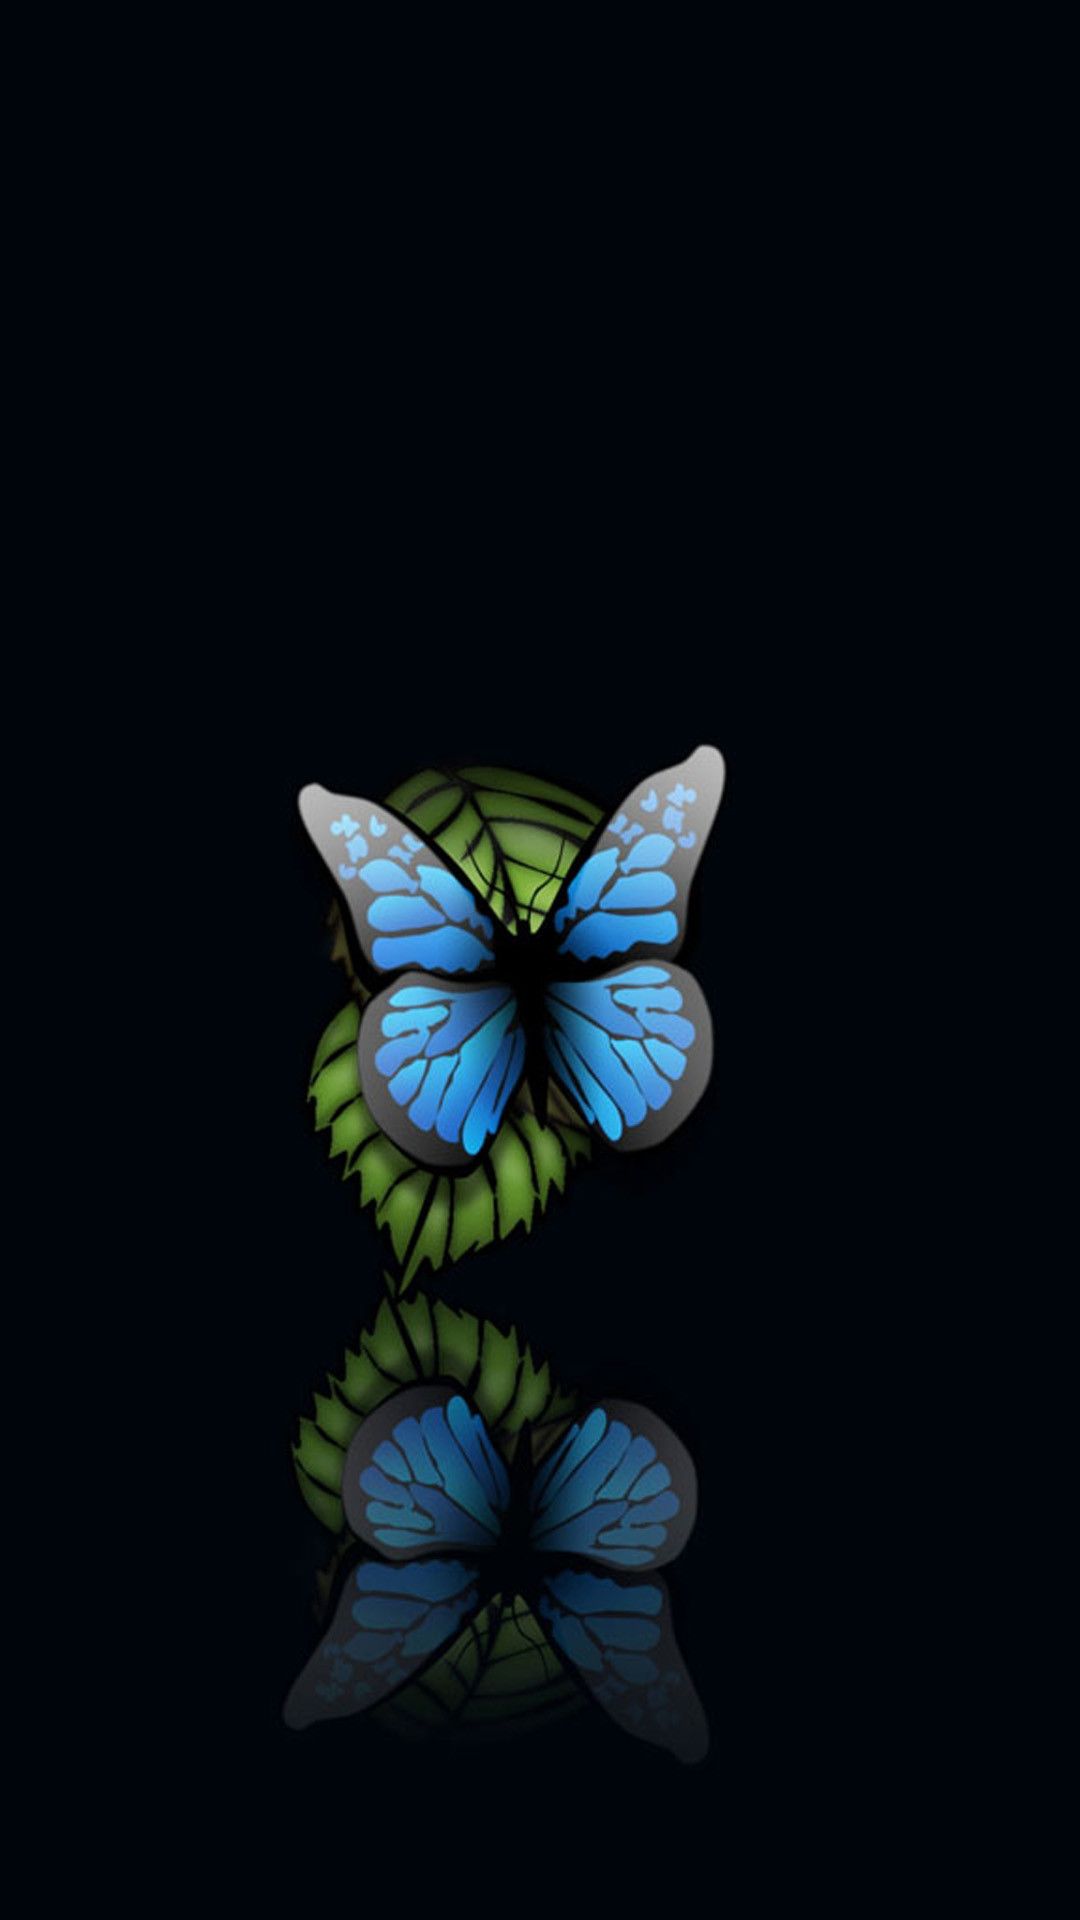 Butterfly Black Backgrounds